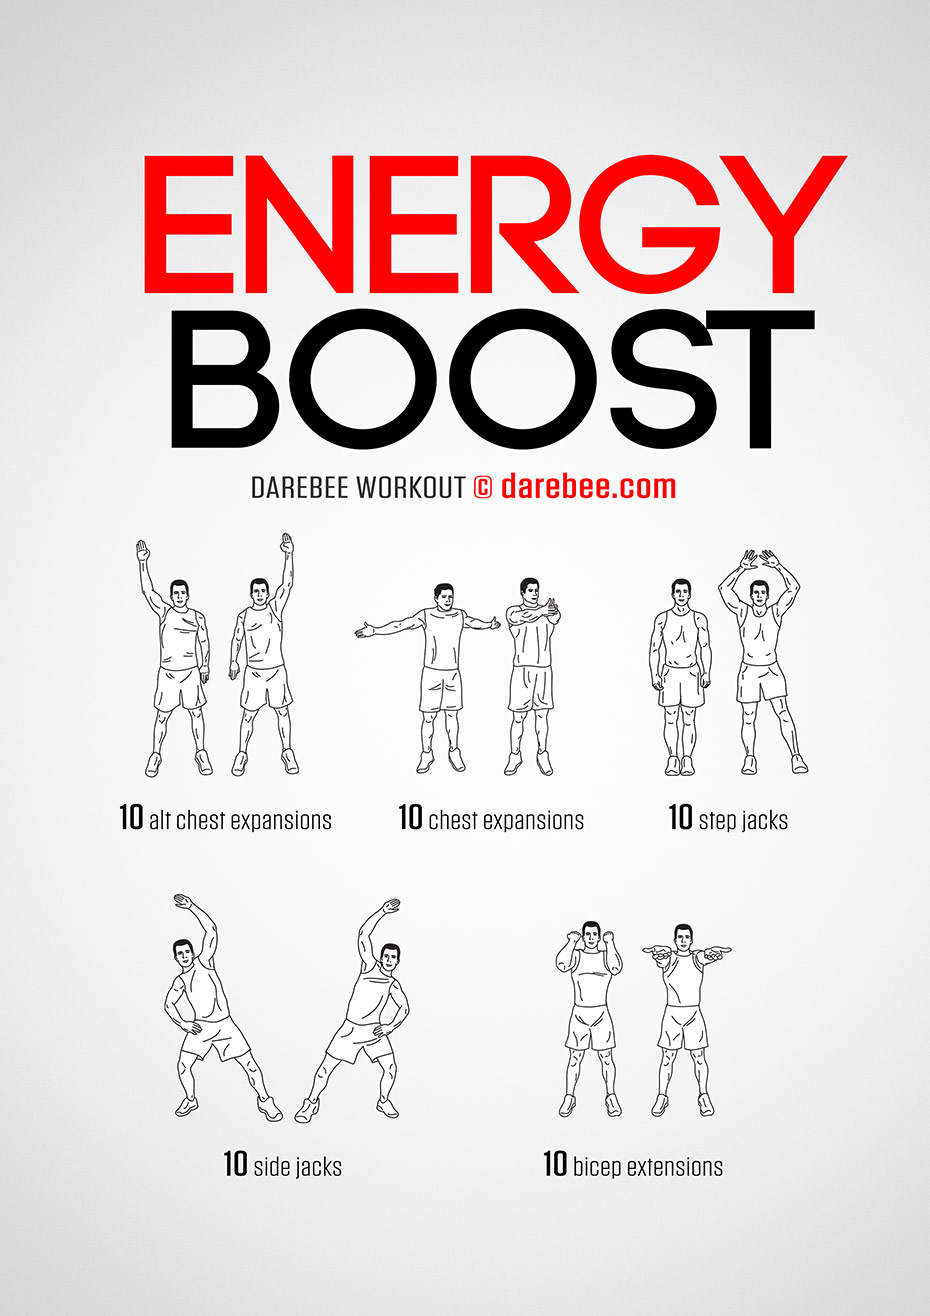 Energizing workouts